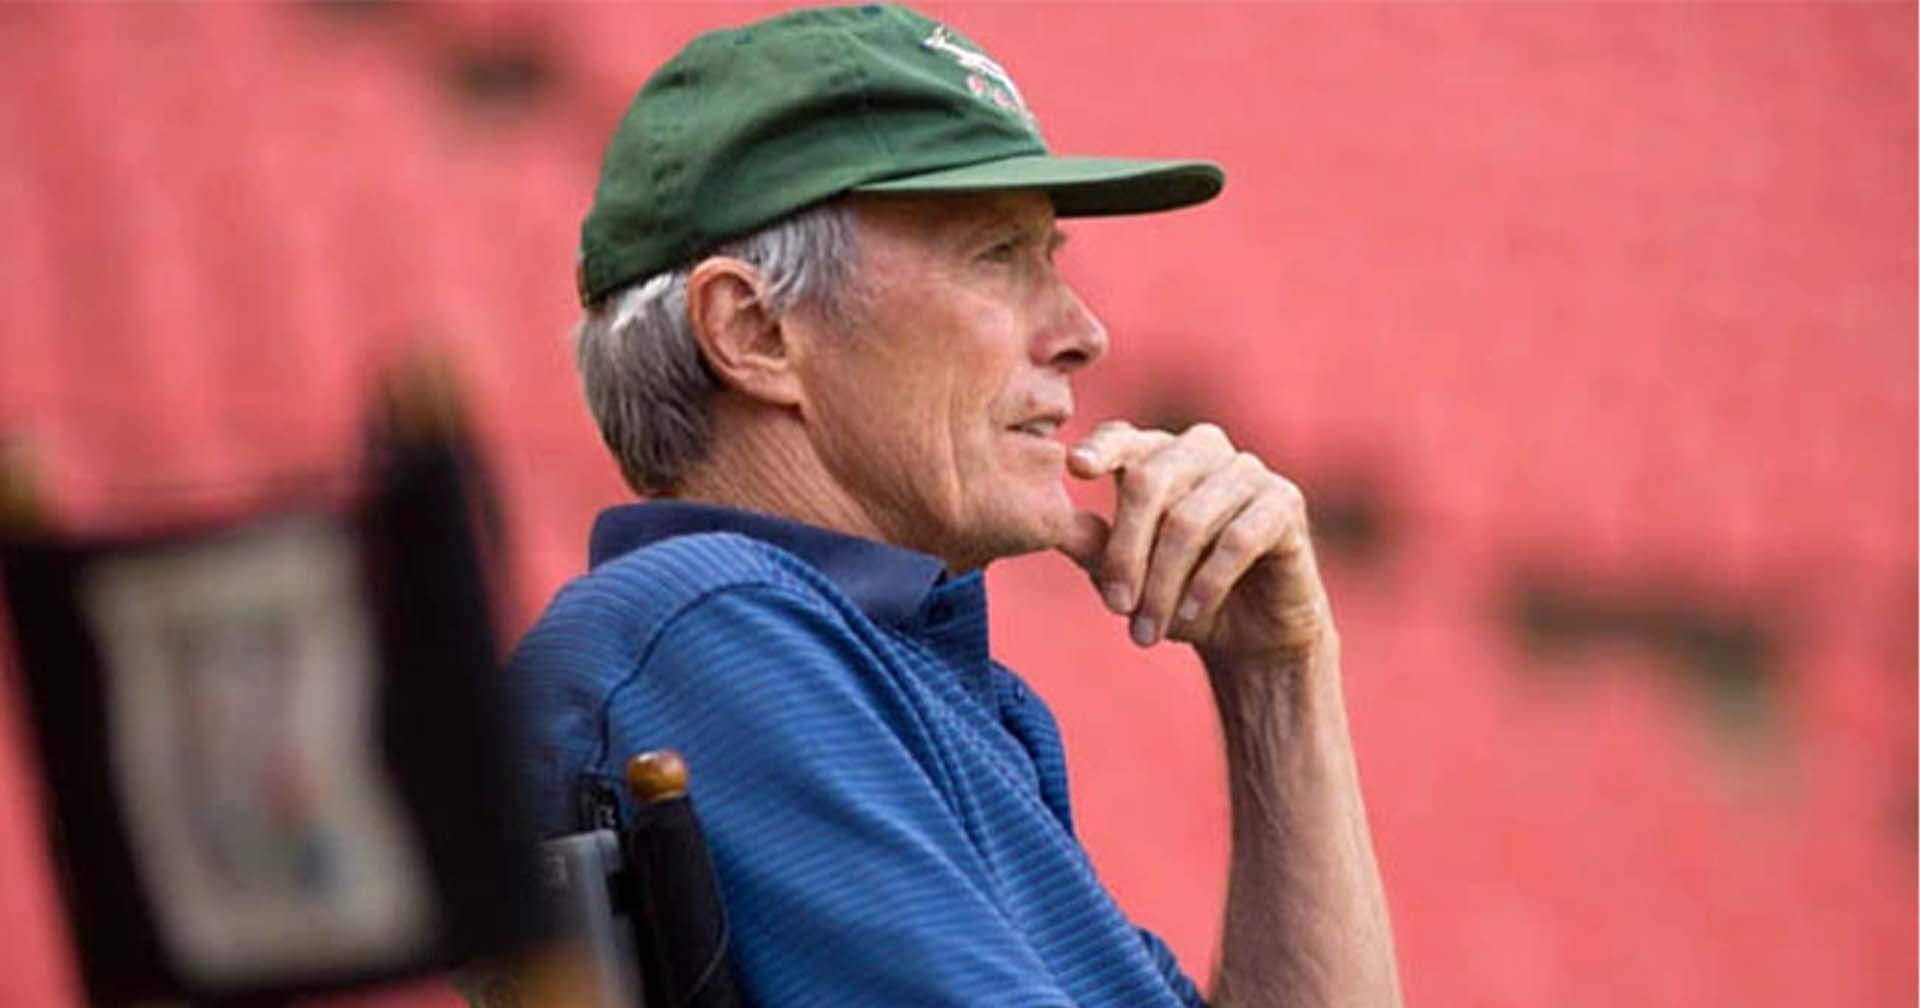 Clint Eastwood ในวัย 93 ปี อาจจะกำกับผลงานเรื่องต่อไป ‘Juror #2’ เป็นเรื่องสุดท้าย